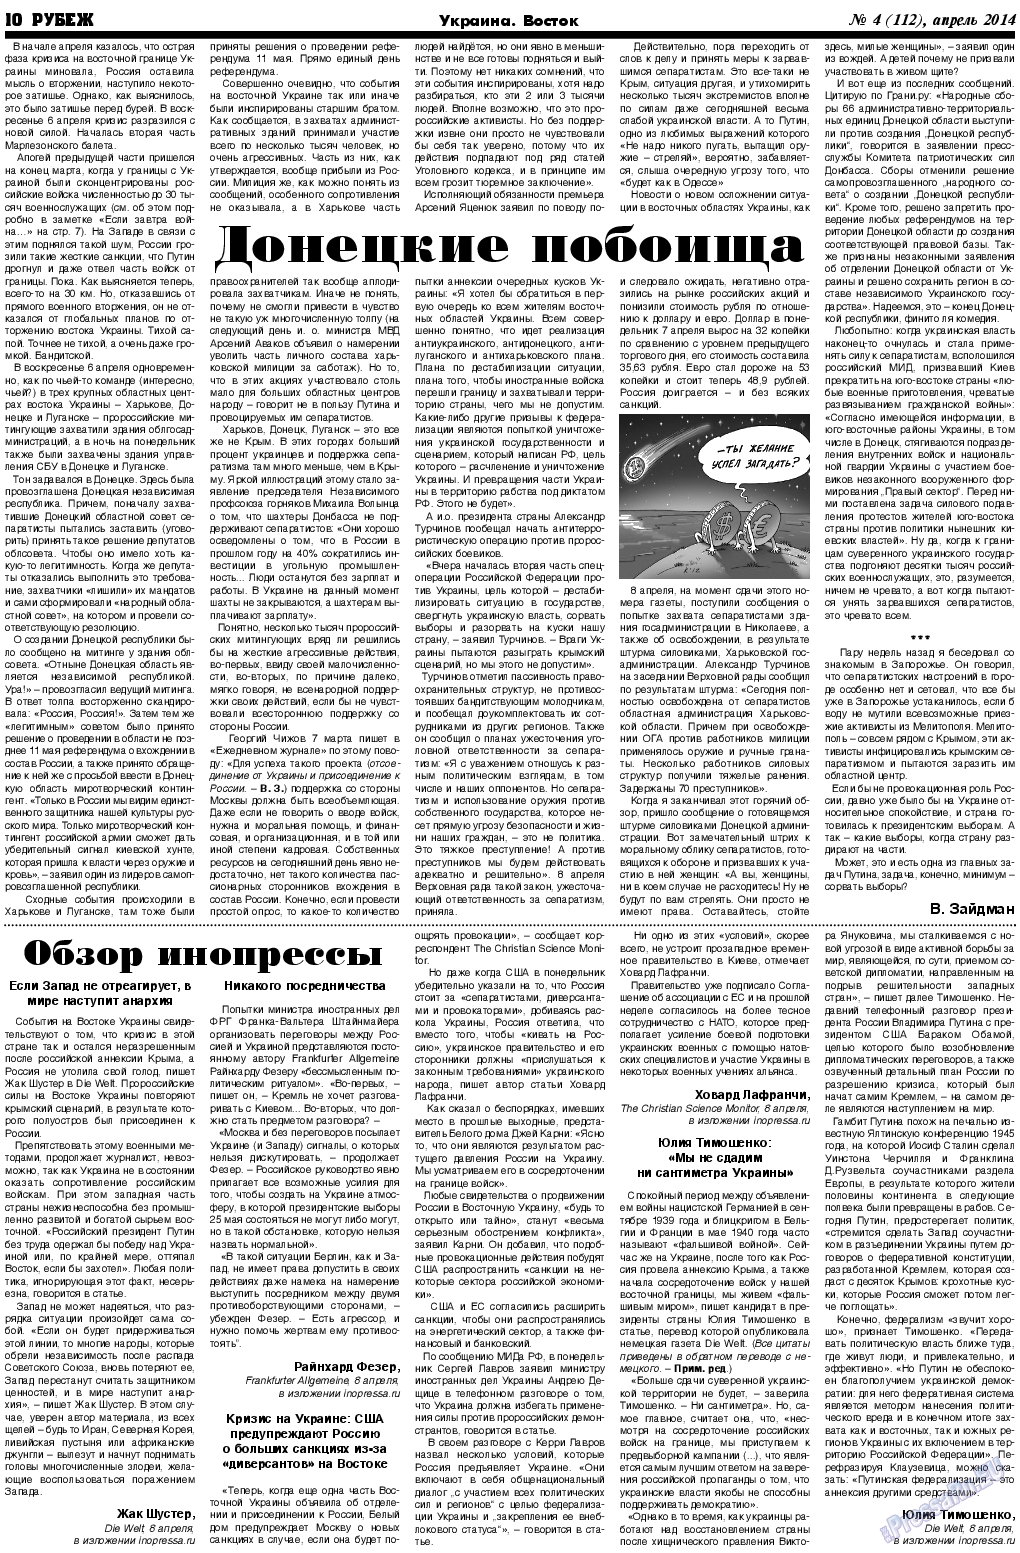 Рубеж, газета. 2014 №4 стр.10